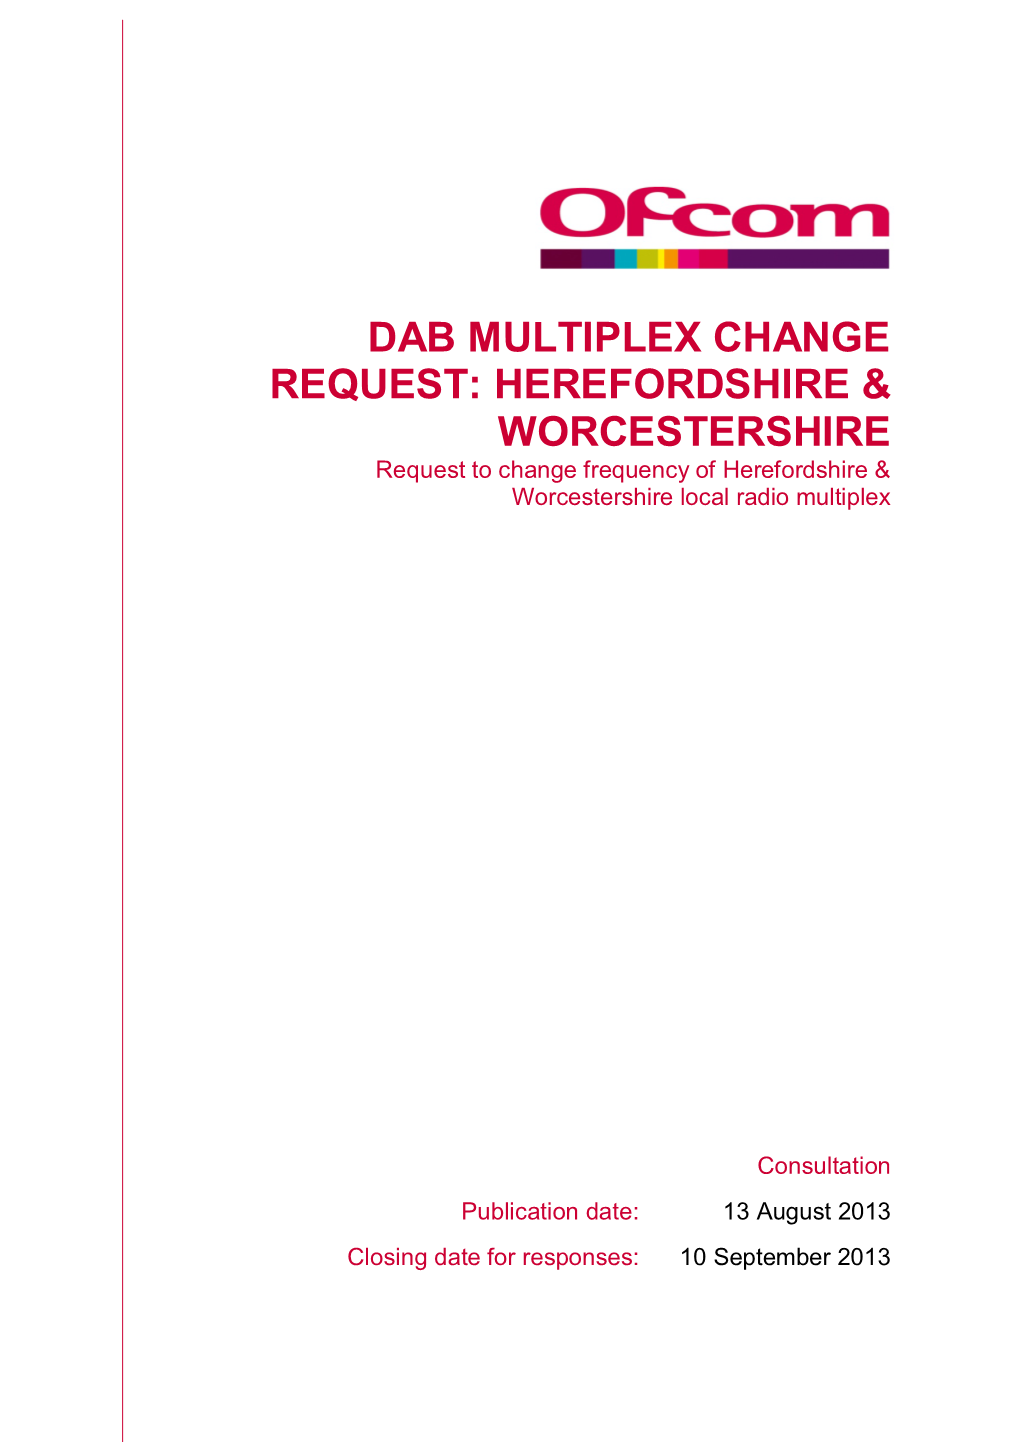 DAB MULTIPLEX CHANGE REQUEST: HEREFORDSHIRE & WORCESTERSHIRE Request to Change Frequency of Herefordshire & Worcestershire Local Radio Multiplex